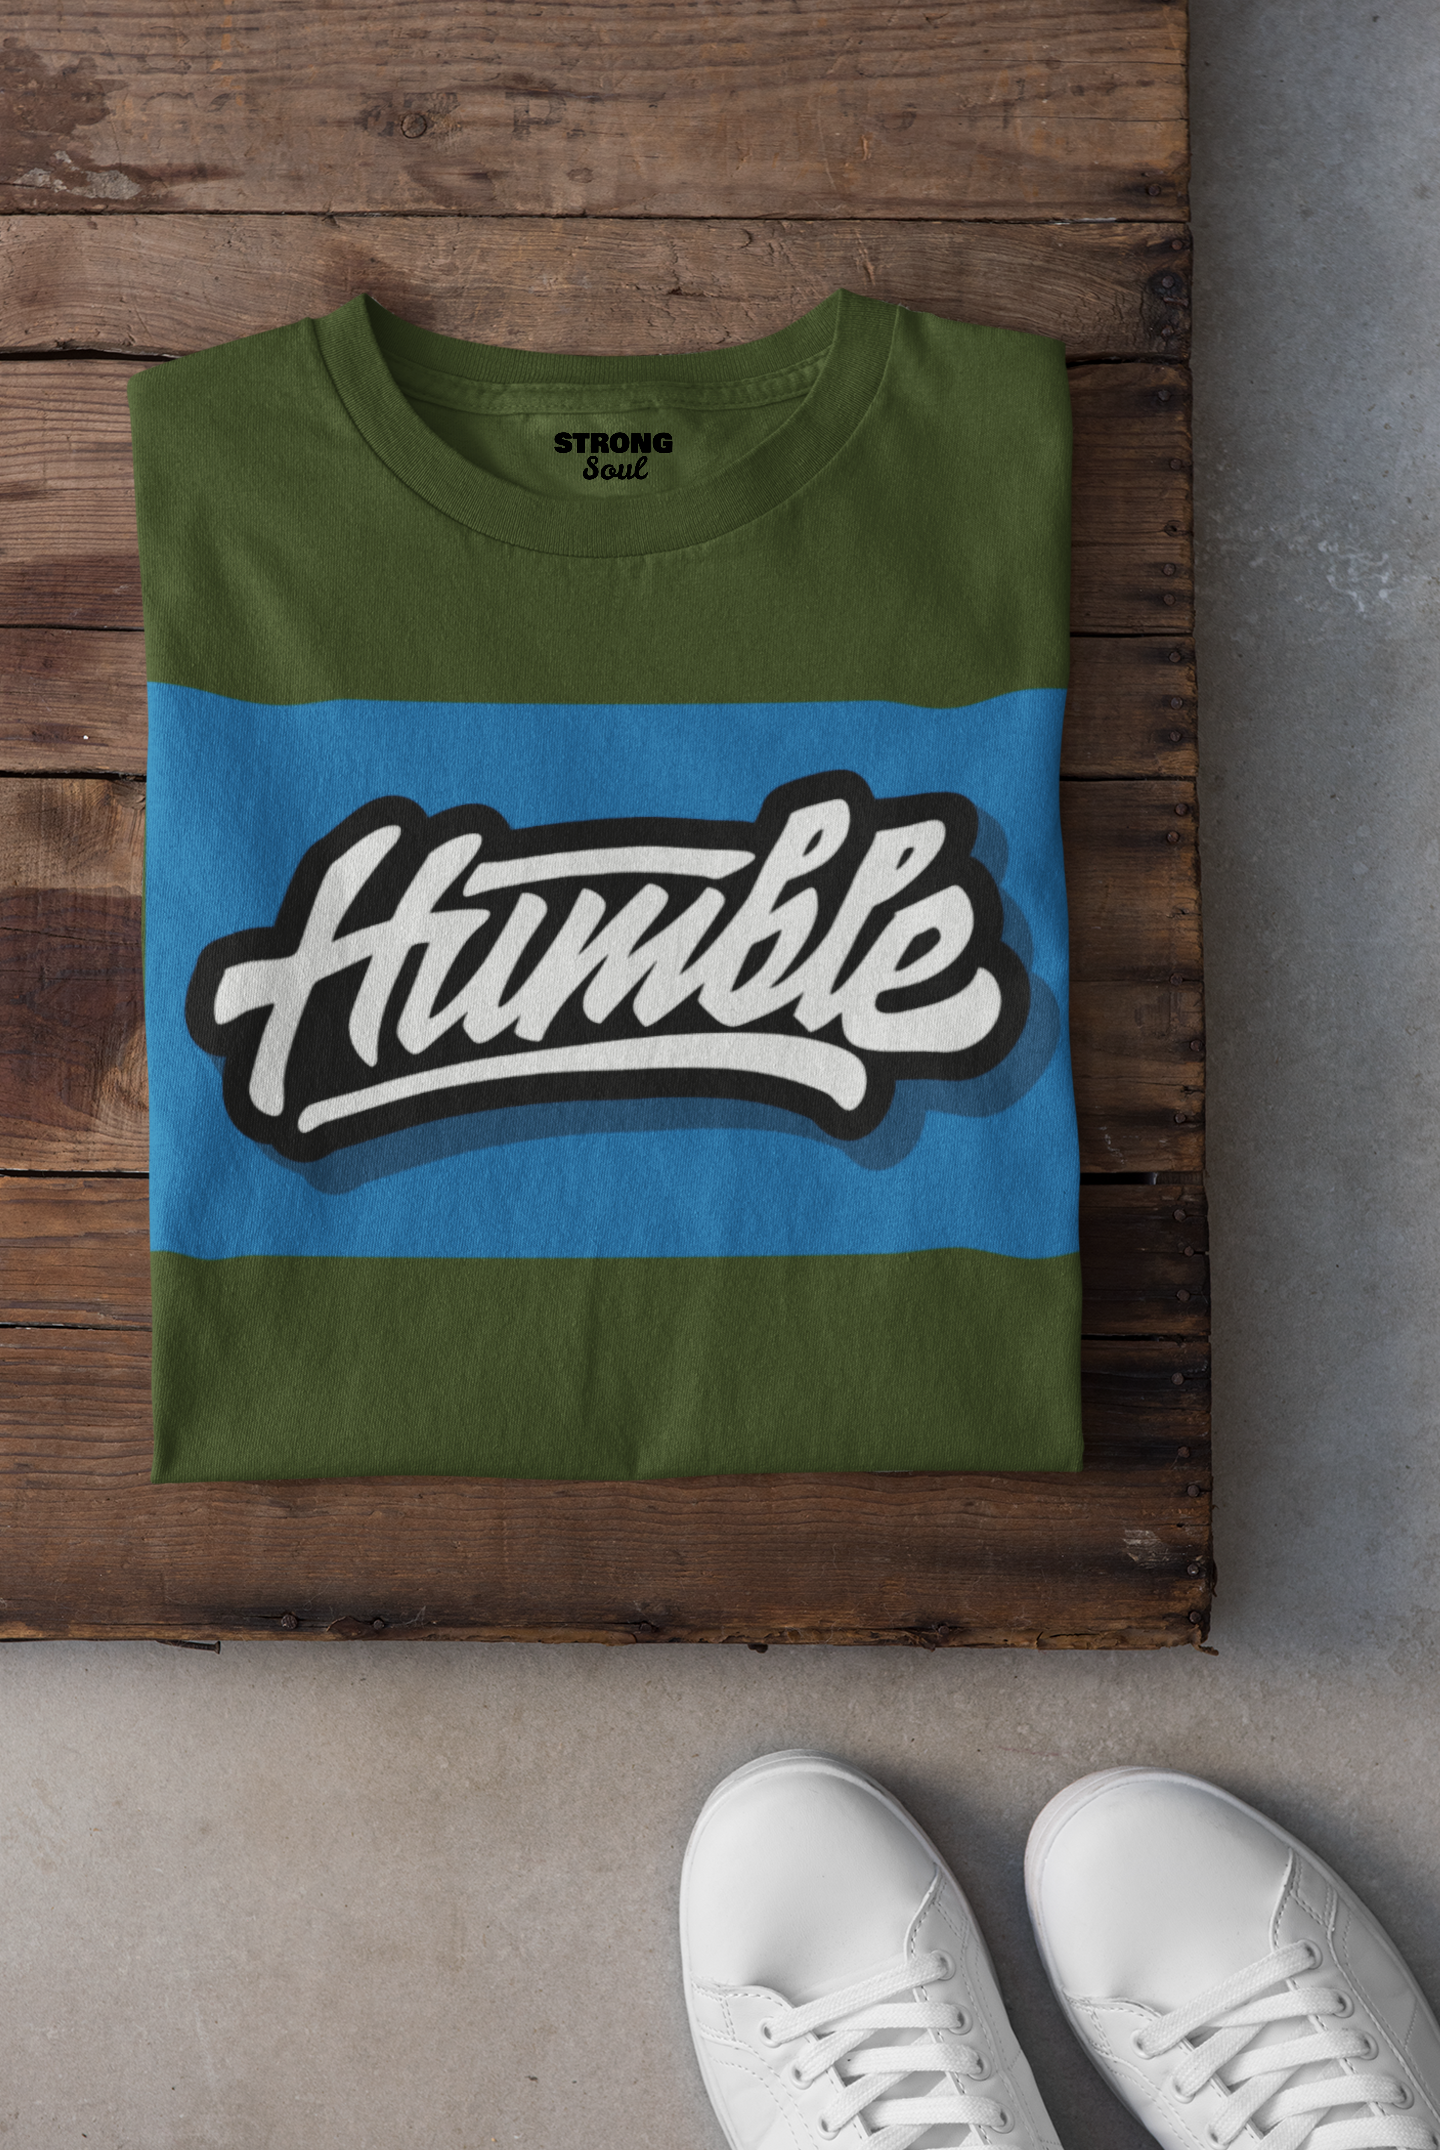 Humble Gym T Shirt Strong Soul Shirts & Tops